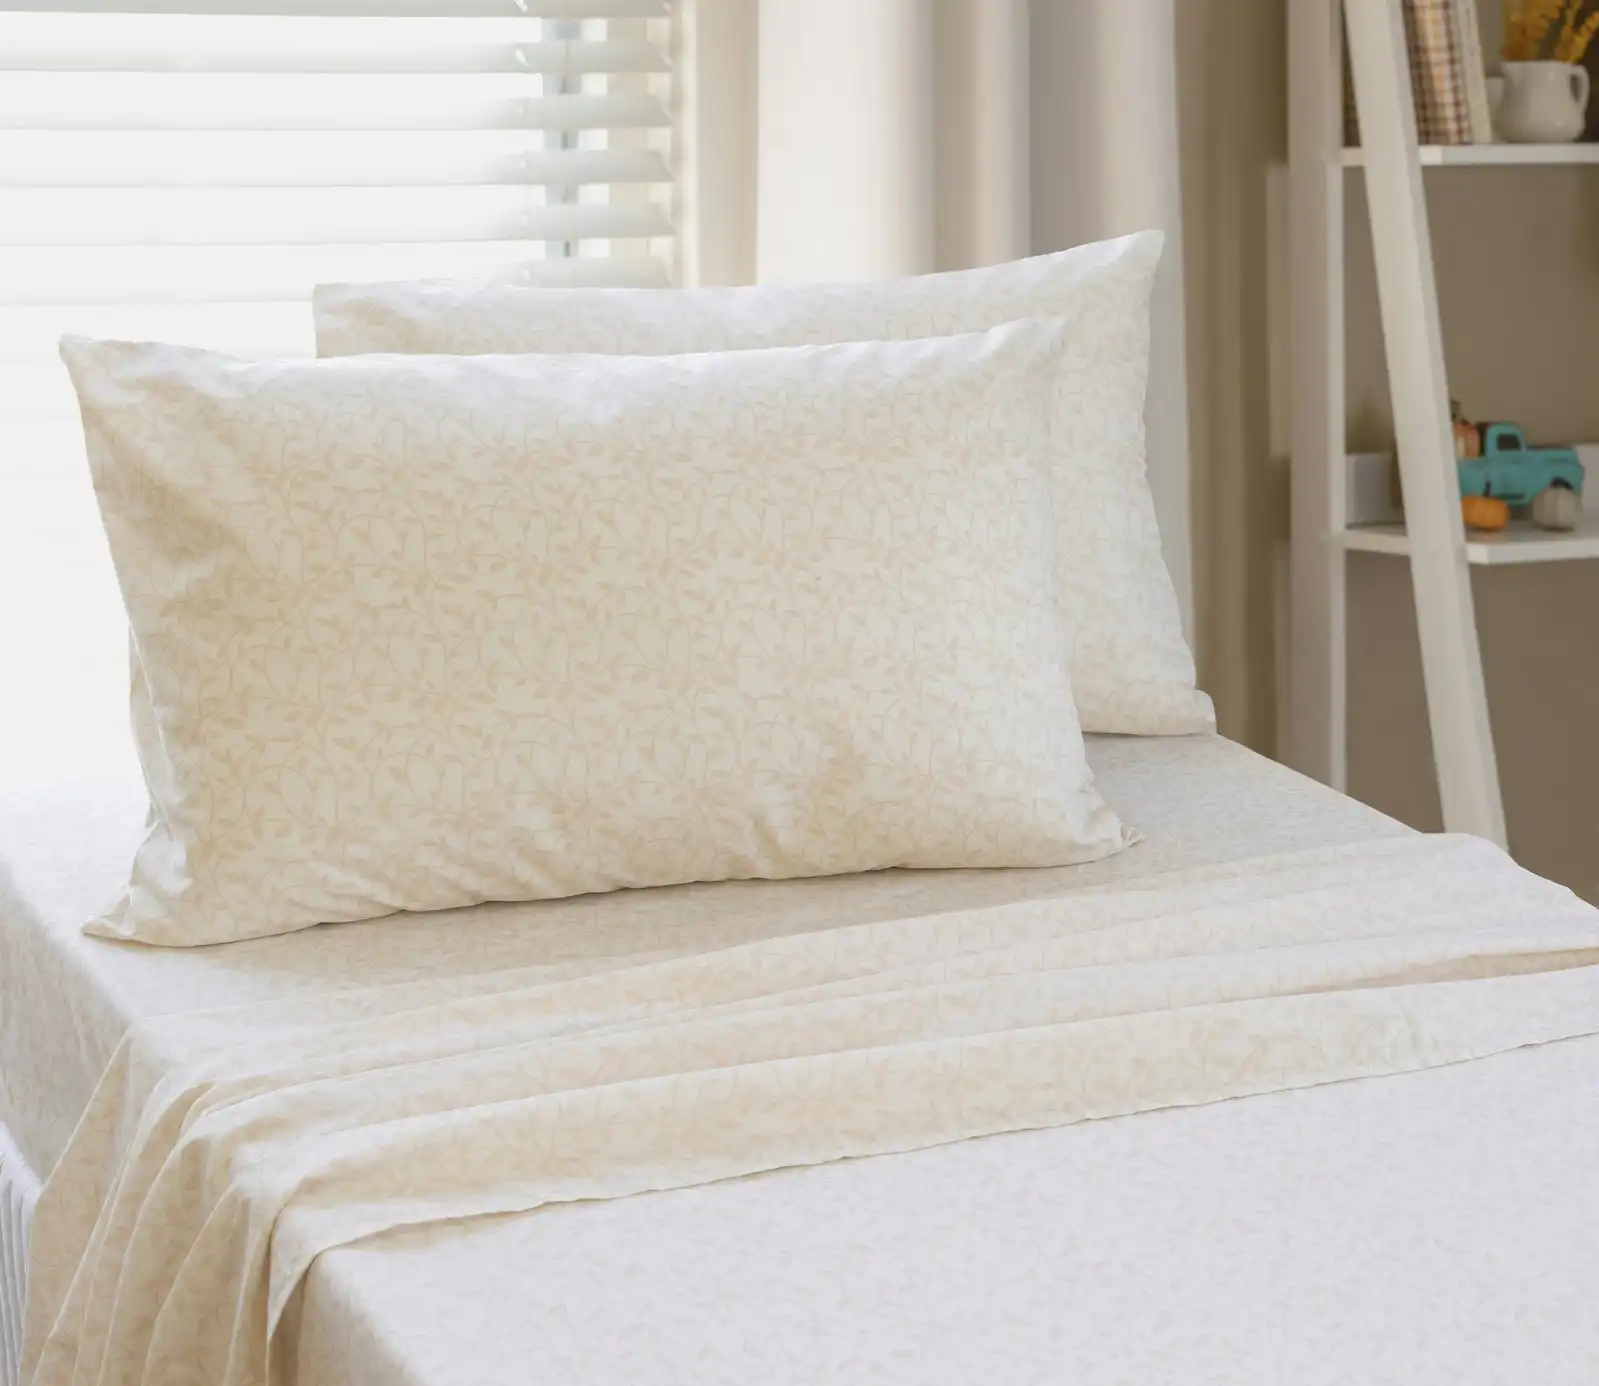 Jelly Bean Kids/Children Double Bed Vine Cotton Sheet Set Home Bedding Soft Rose